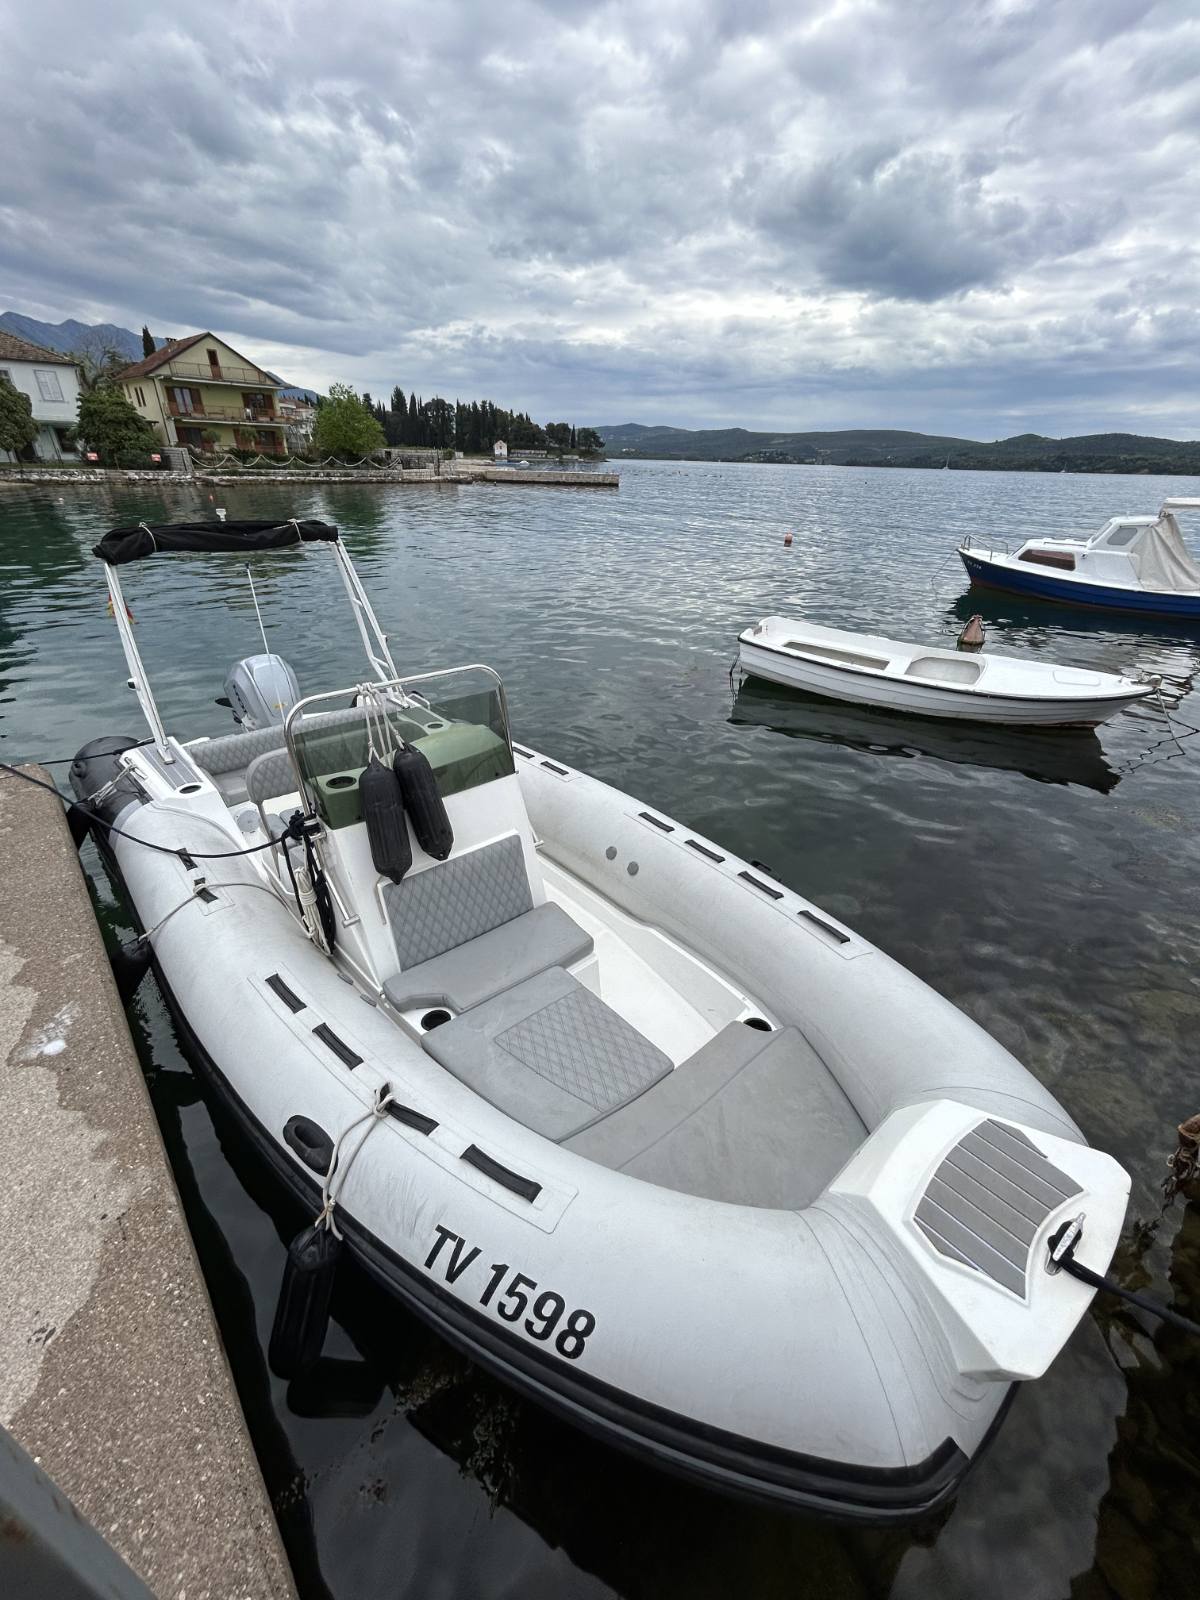 Tiger Topline 600 - Motor Boat Charter Montenegro & Boat hire in Montenegro Bay of Kotor Tivat Porto Montenegro 2